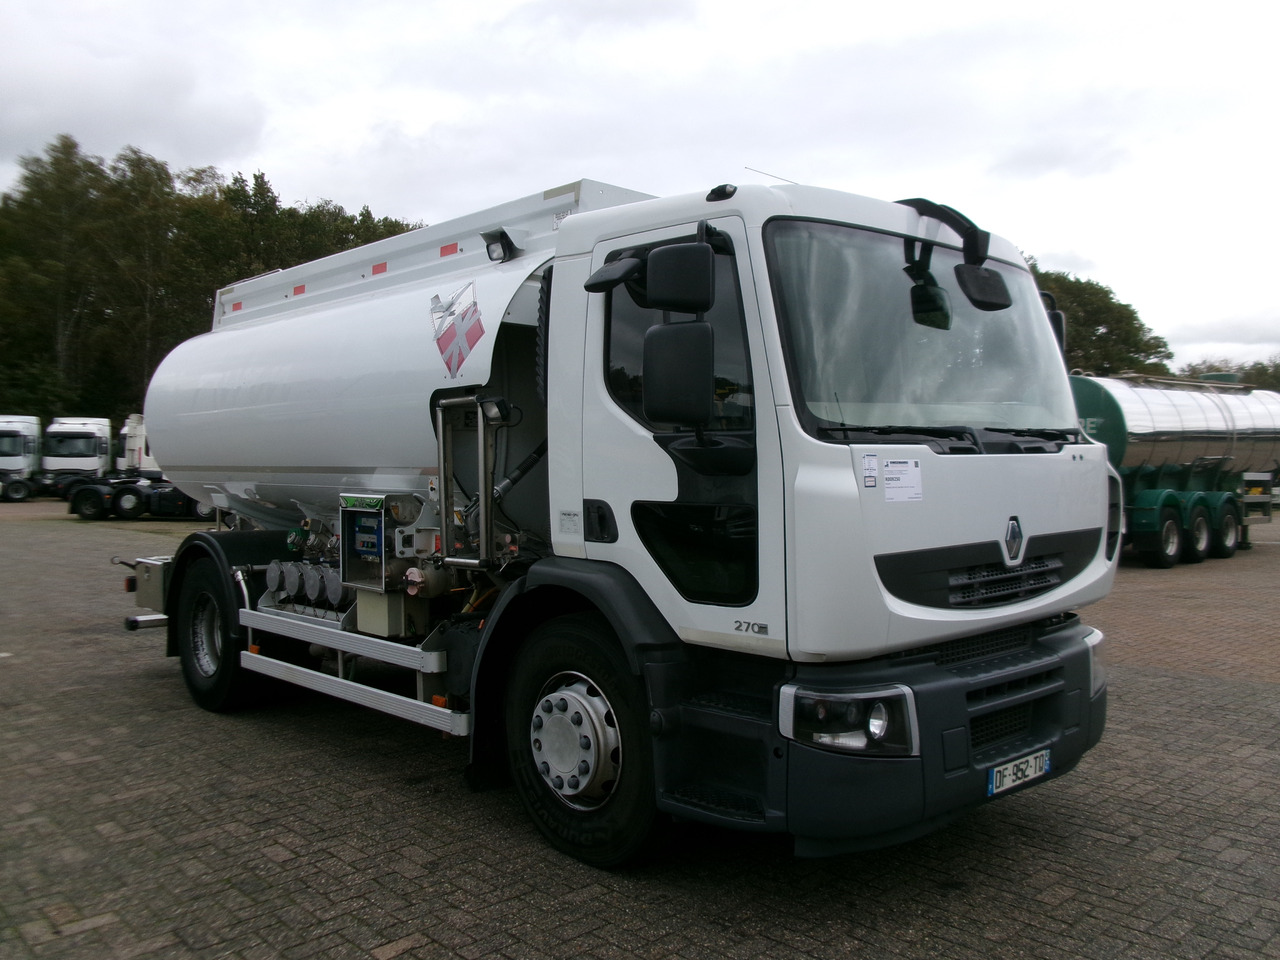 Tanker truck for transportation of fuel Renault Premium 260 4x2 fuel tank 13.8 m3 / 4 comp: picture 2